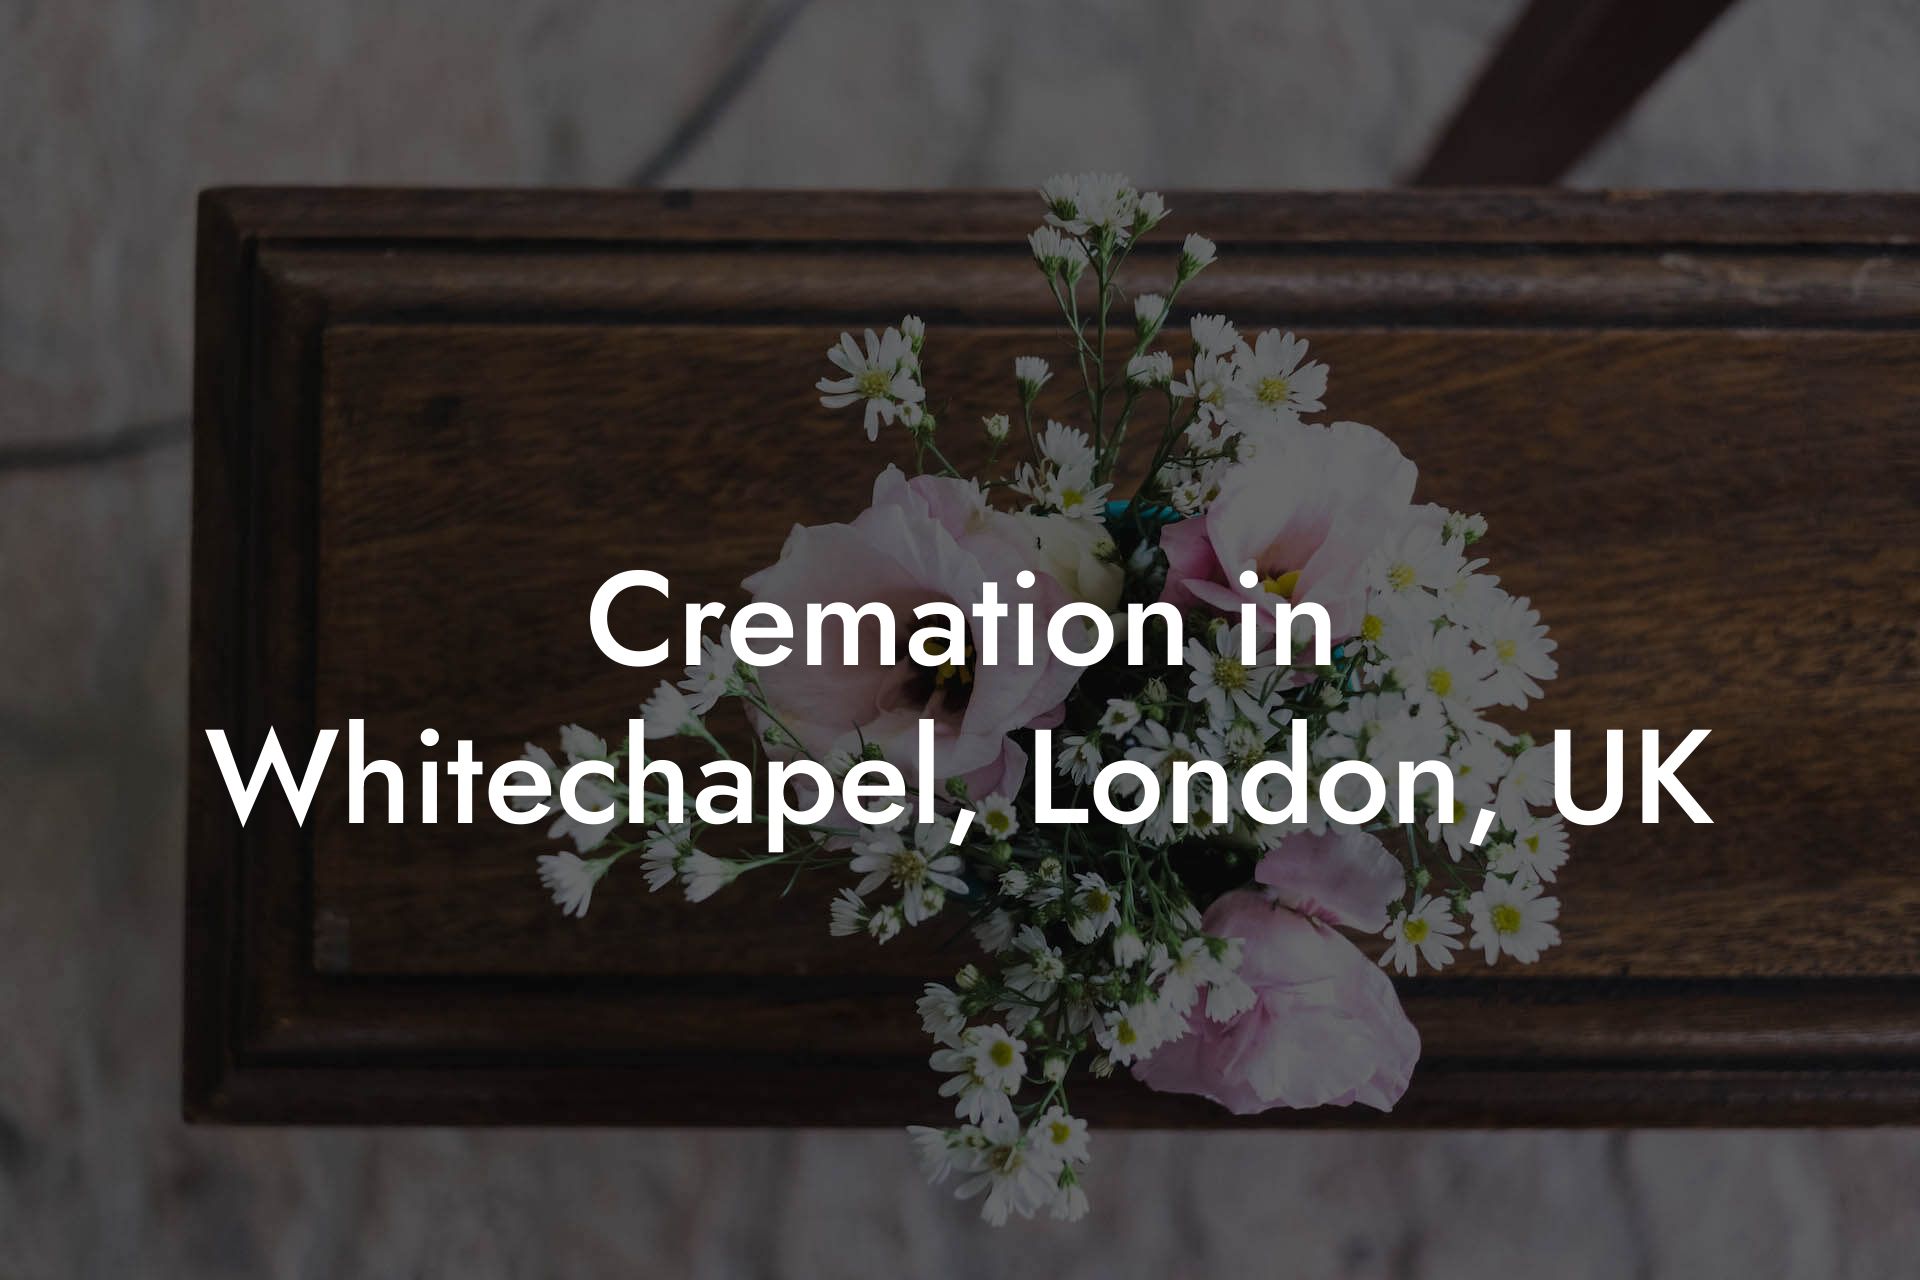 Cremation in Whitechapel, London, UK